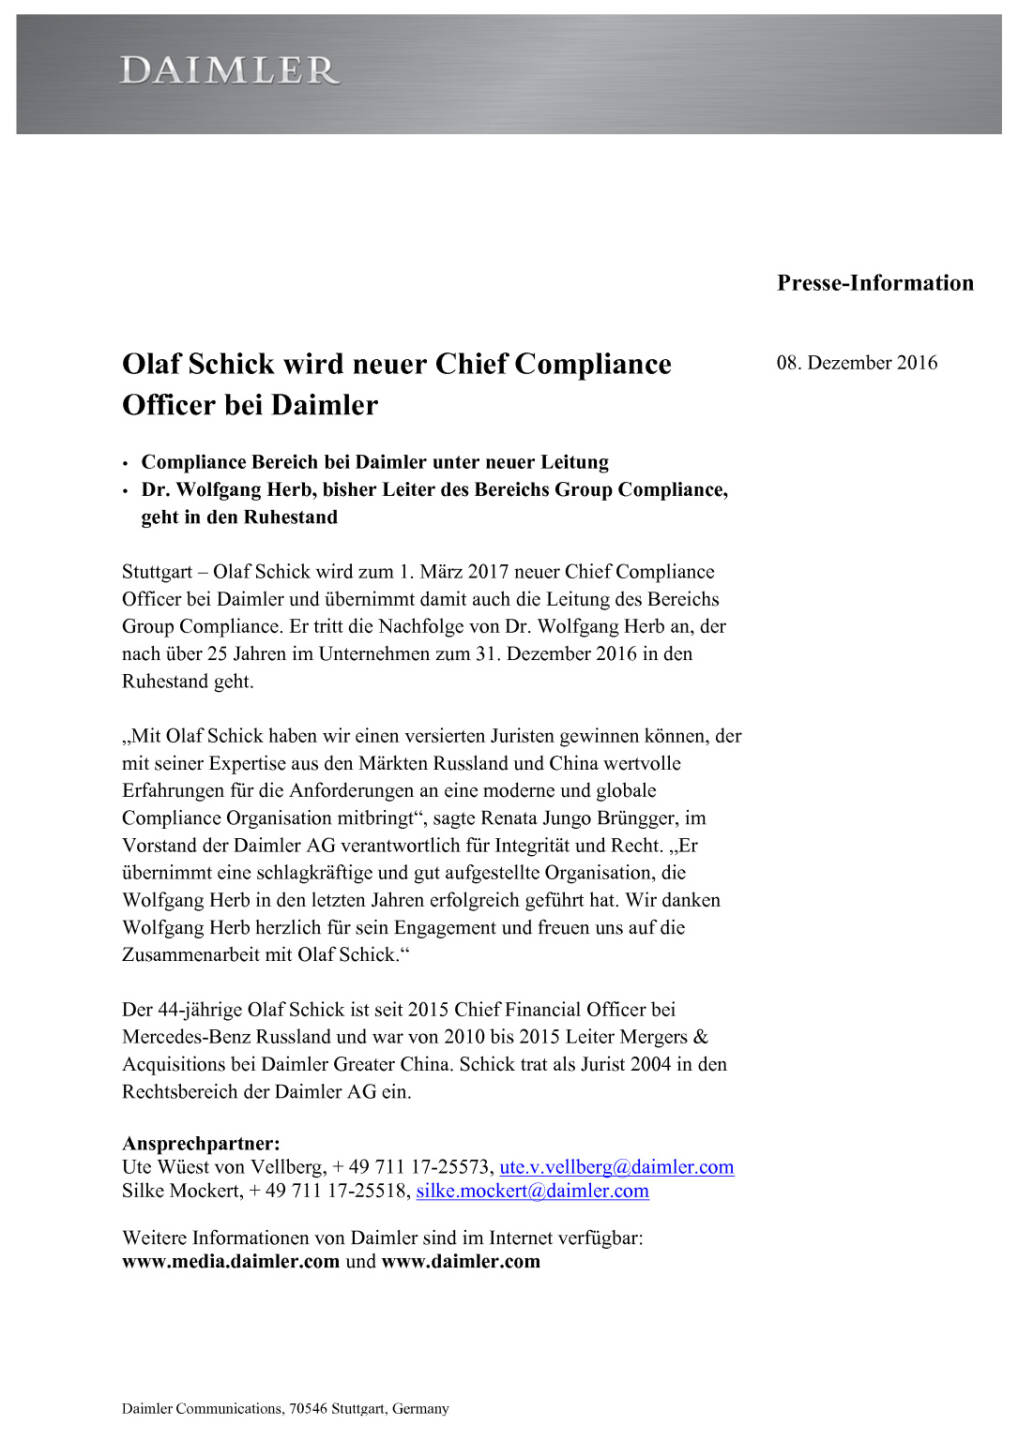 Olaf Schick wird neuer Chief Compliance Officer bei Daimler, Seite 1/2, komplettes Dokument unter http://boerse-social.com/static/uploads/file_2010_olaf_schick_wird_neuer_chief_compliance_officer_bei_daimler.pdf